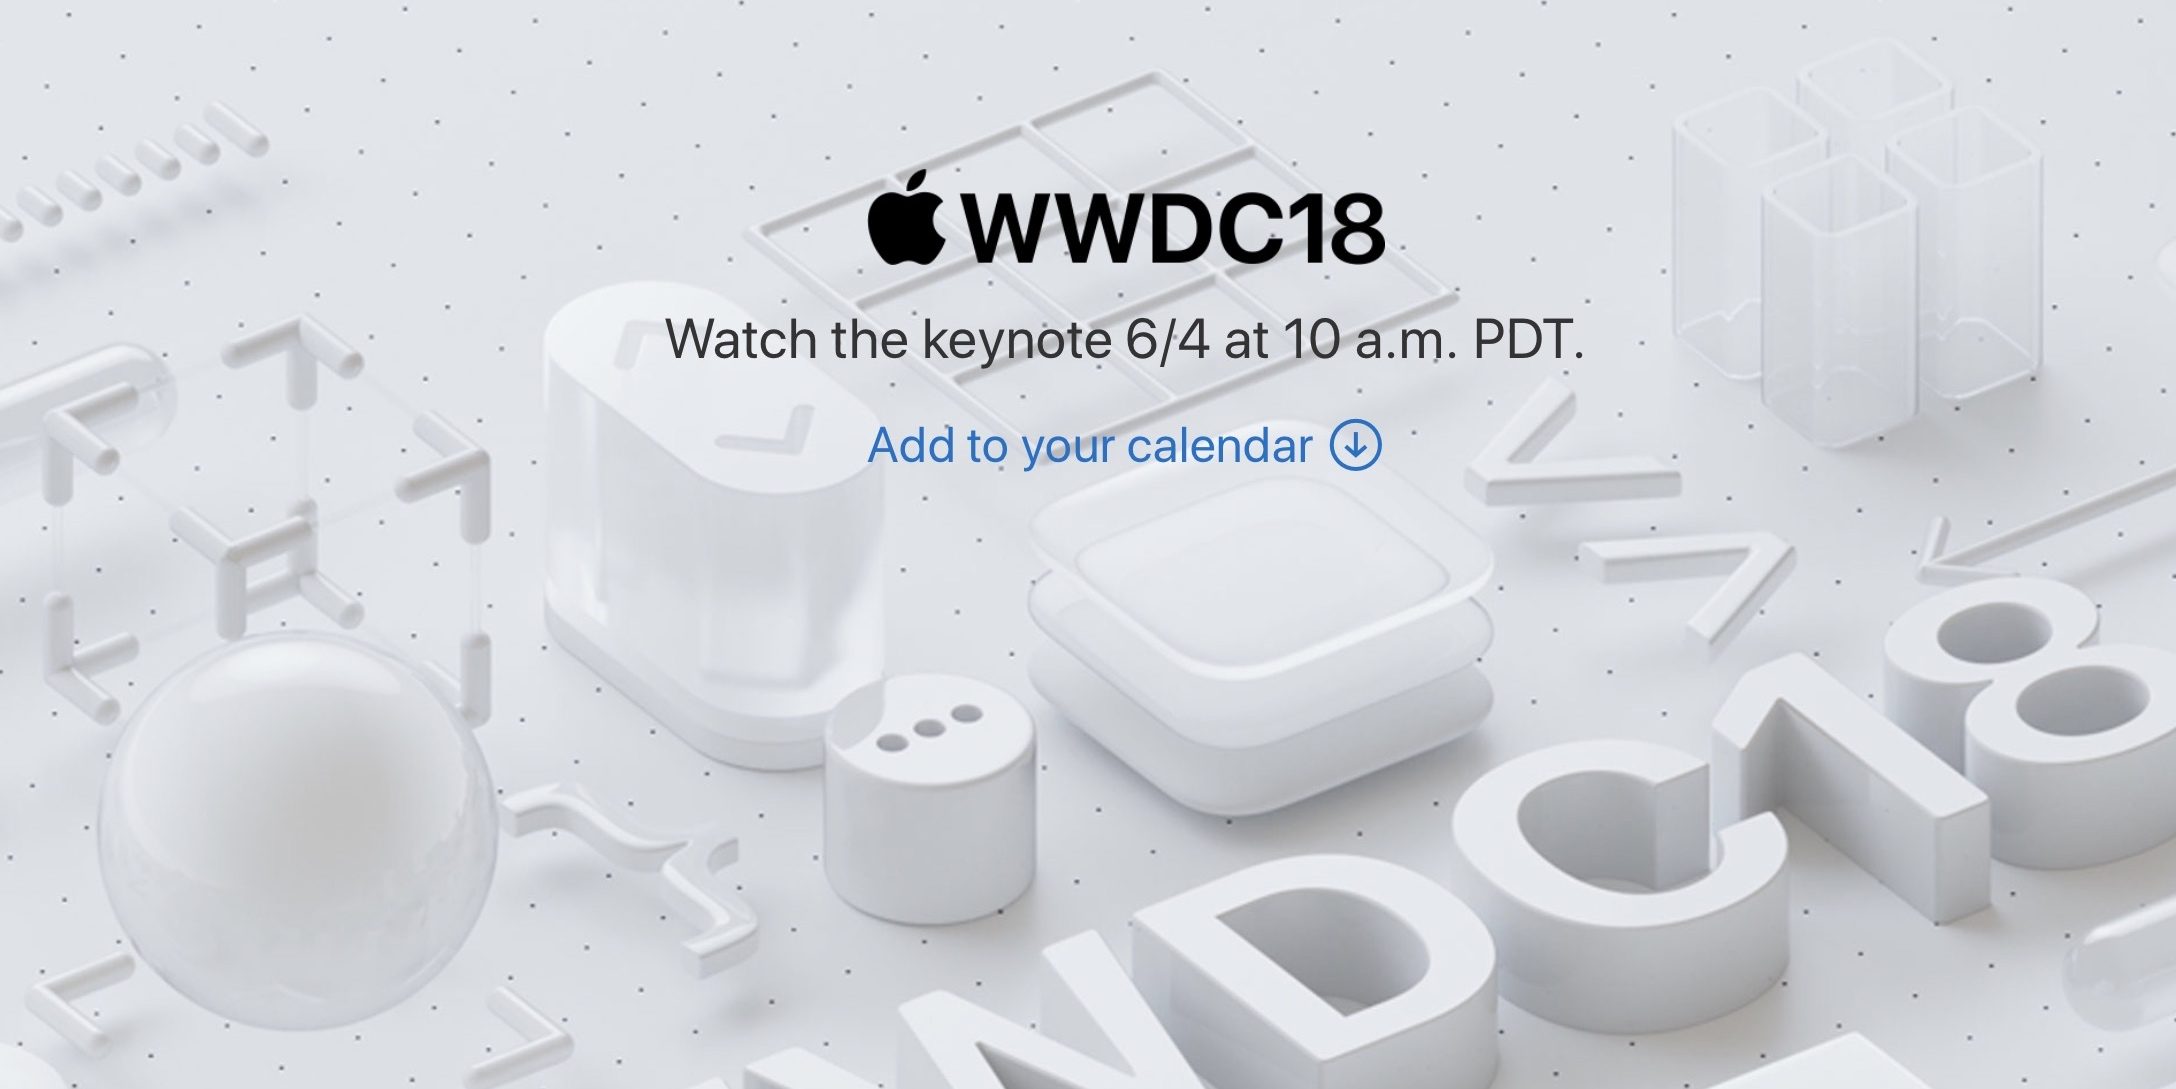 Apple Confirms it Will Live Stream WWDC Keynote on June 4